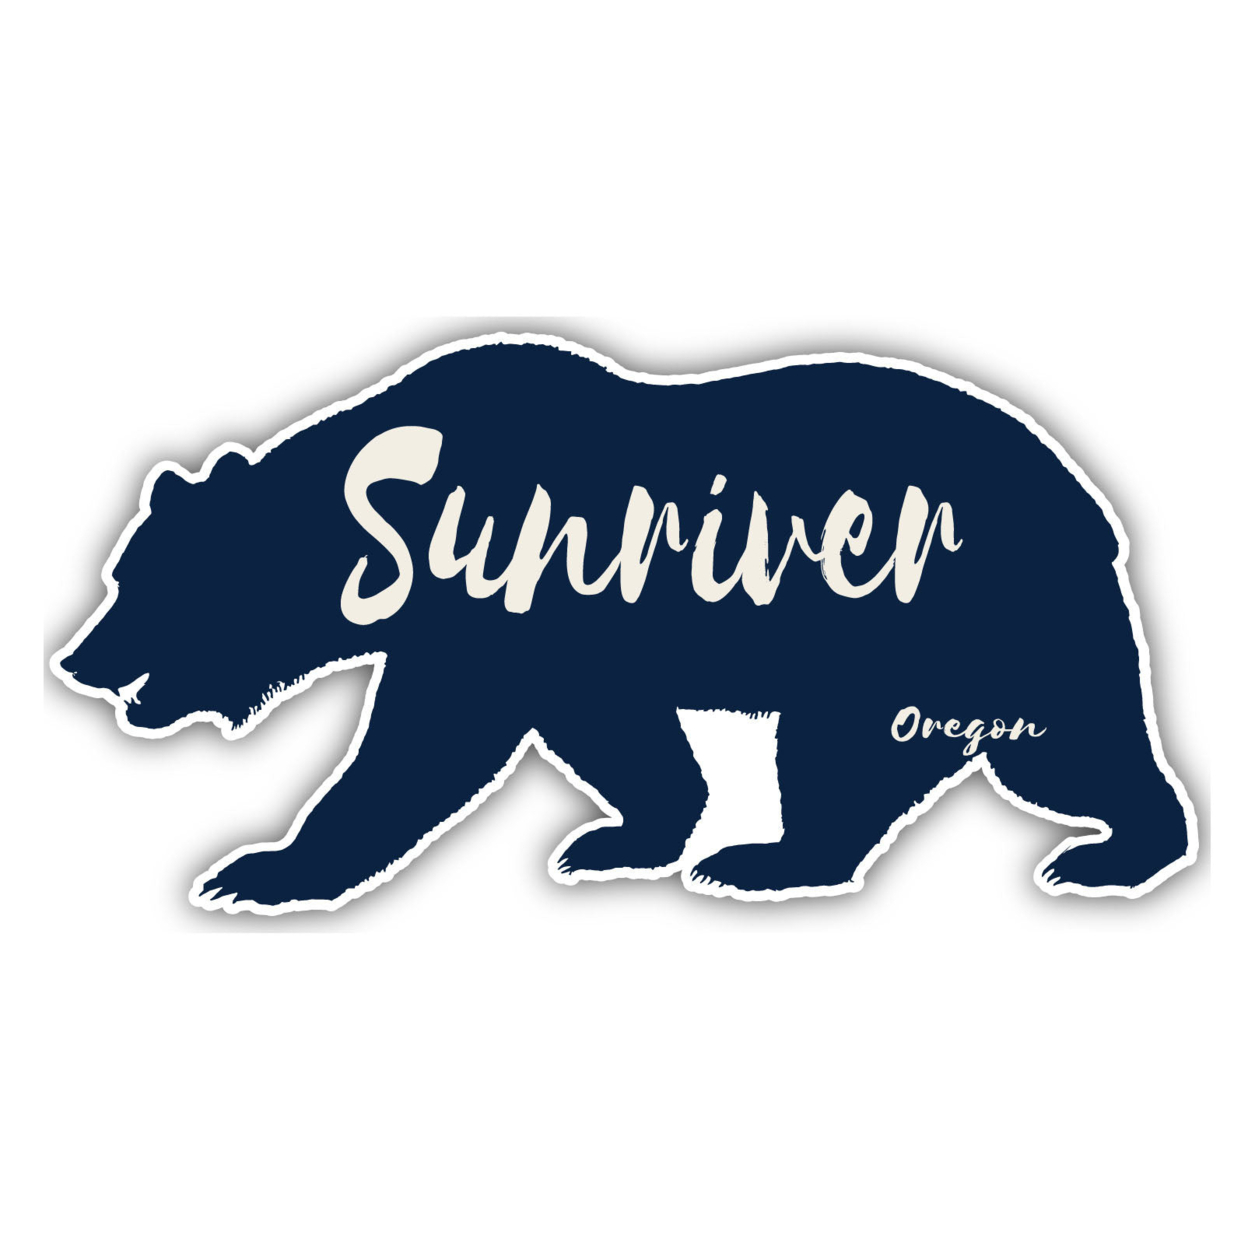 Sunriver Oregon Souvenir Decorative Stickers (Choose Theme And Size) - Single Unit, 2-Inch, Bear